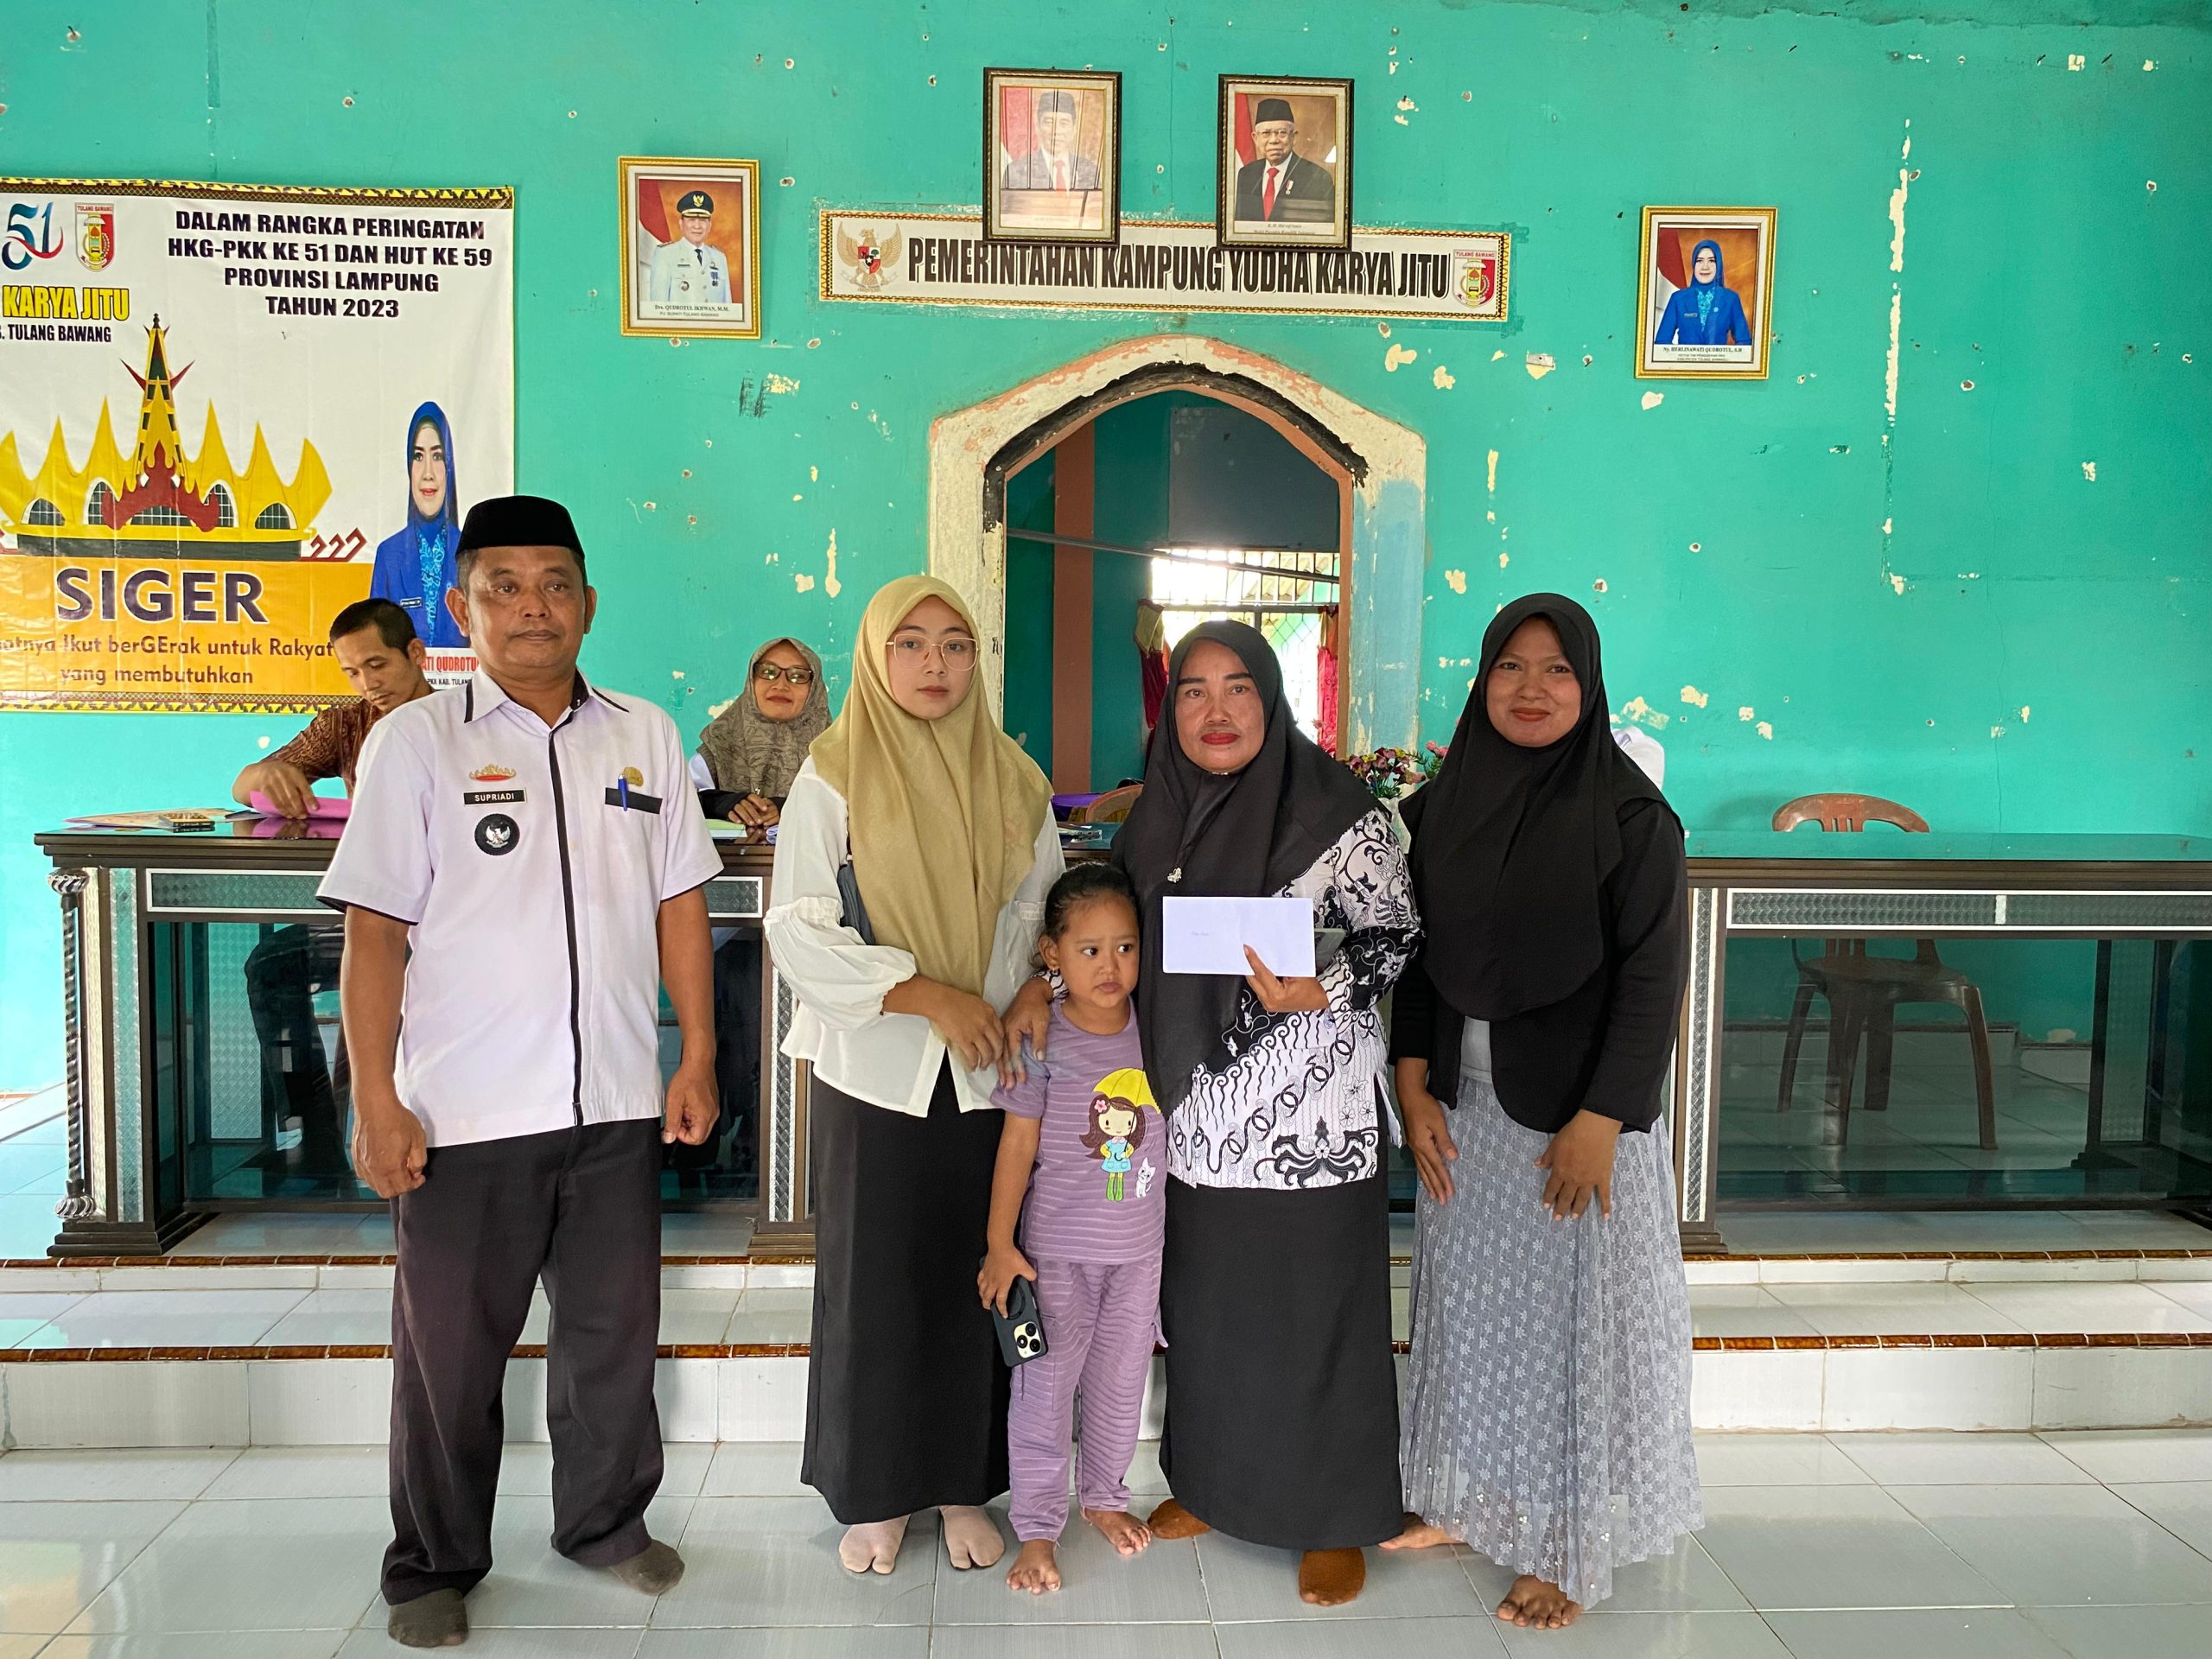 Pemerintah Kampung Yudha Karya Jitu Salurkan Insentif Guru PAUD